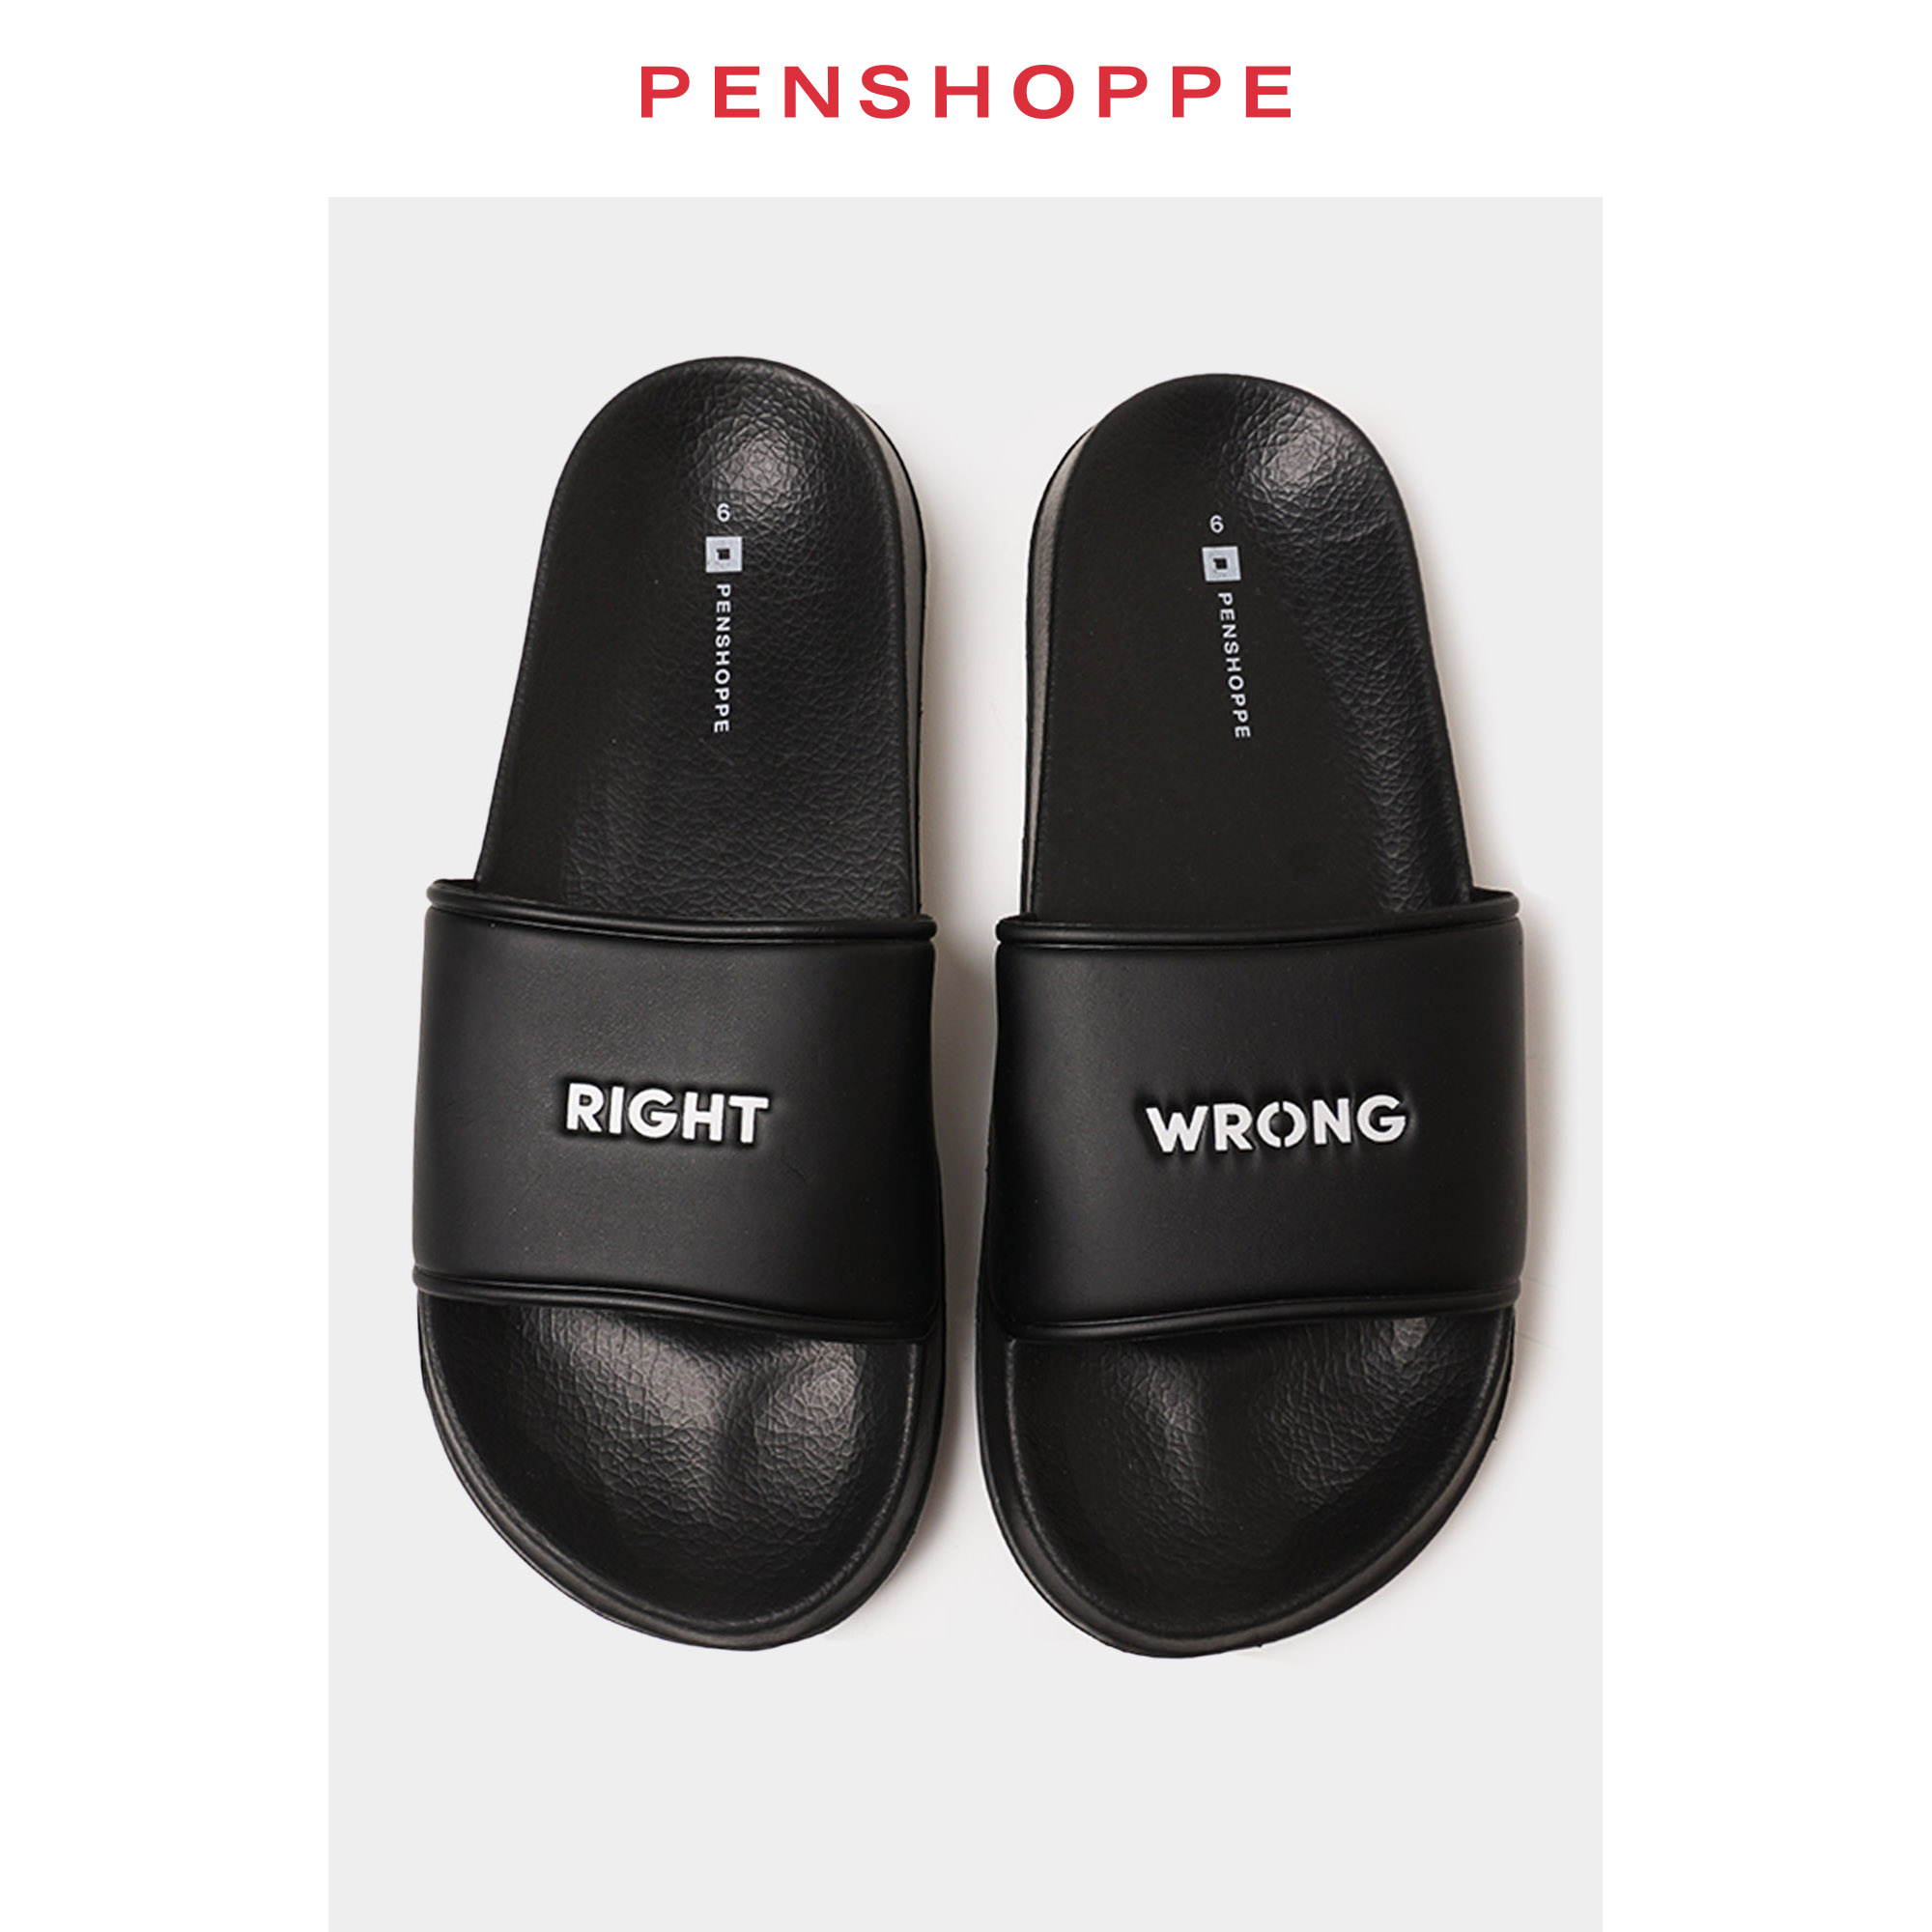 PENSHOPPE Men's Sandals Slides for sale 